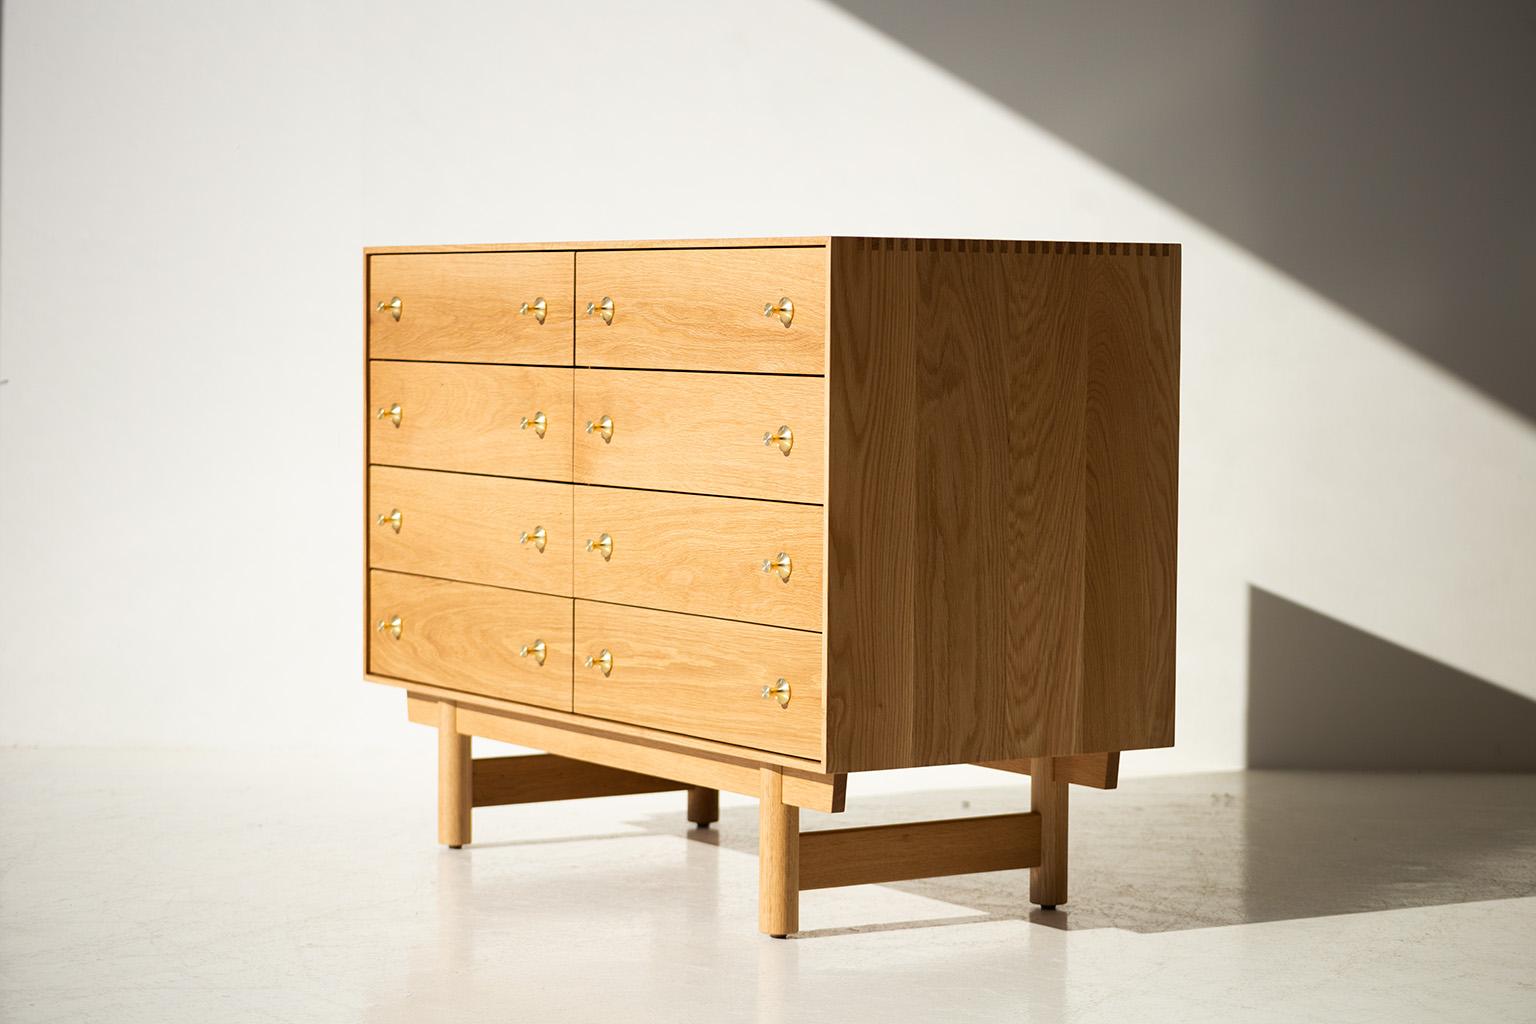 designer: Lawrence Peabody

Manufacturer: Craft Associates® Furniture
Period/Model: Mid Century Modern
Specs: Oak, Brass


dimensions 

H: 30.5